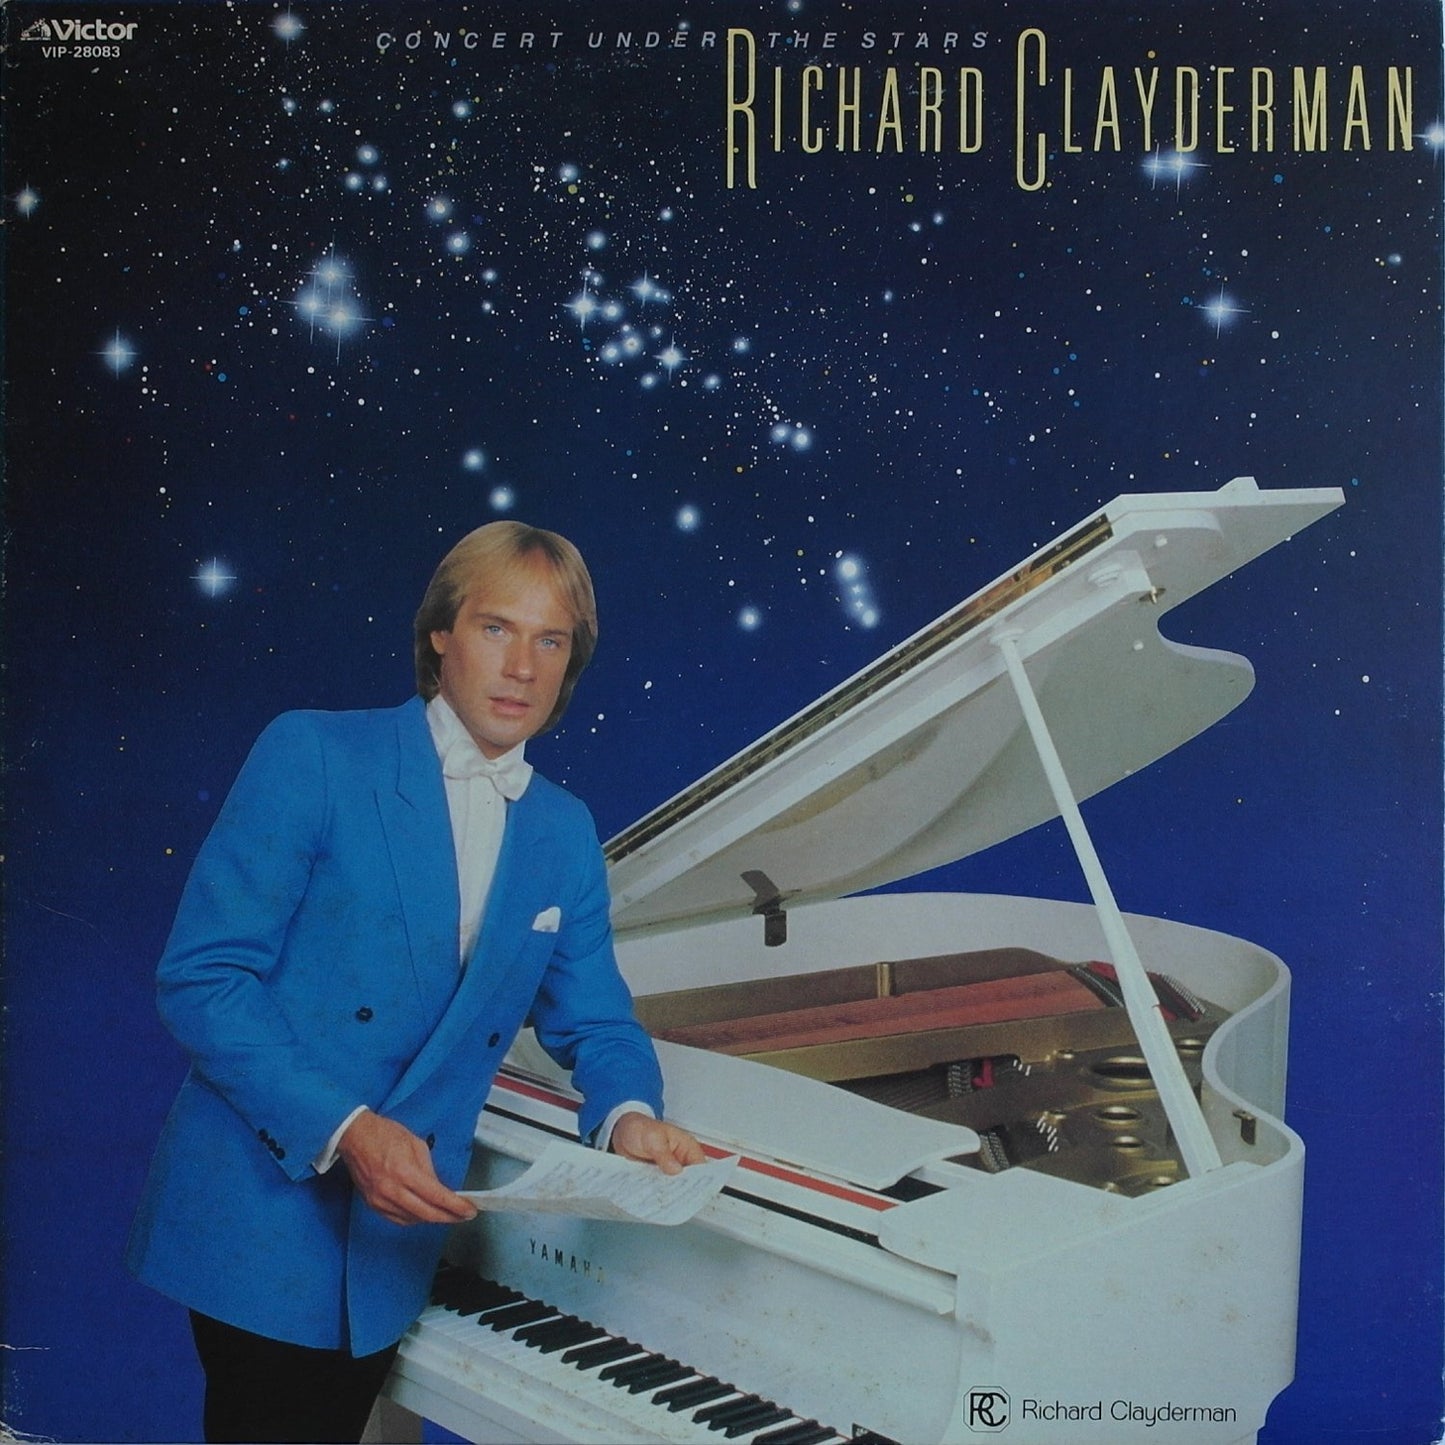 RICHARD CLAYDERMAN AT SON ORCHESTRE - Concert Under The Stars